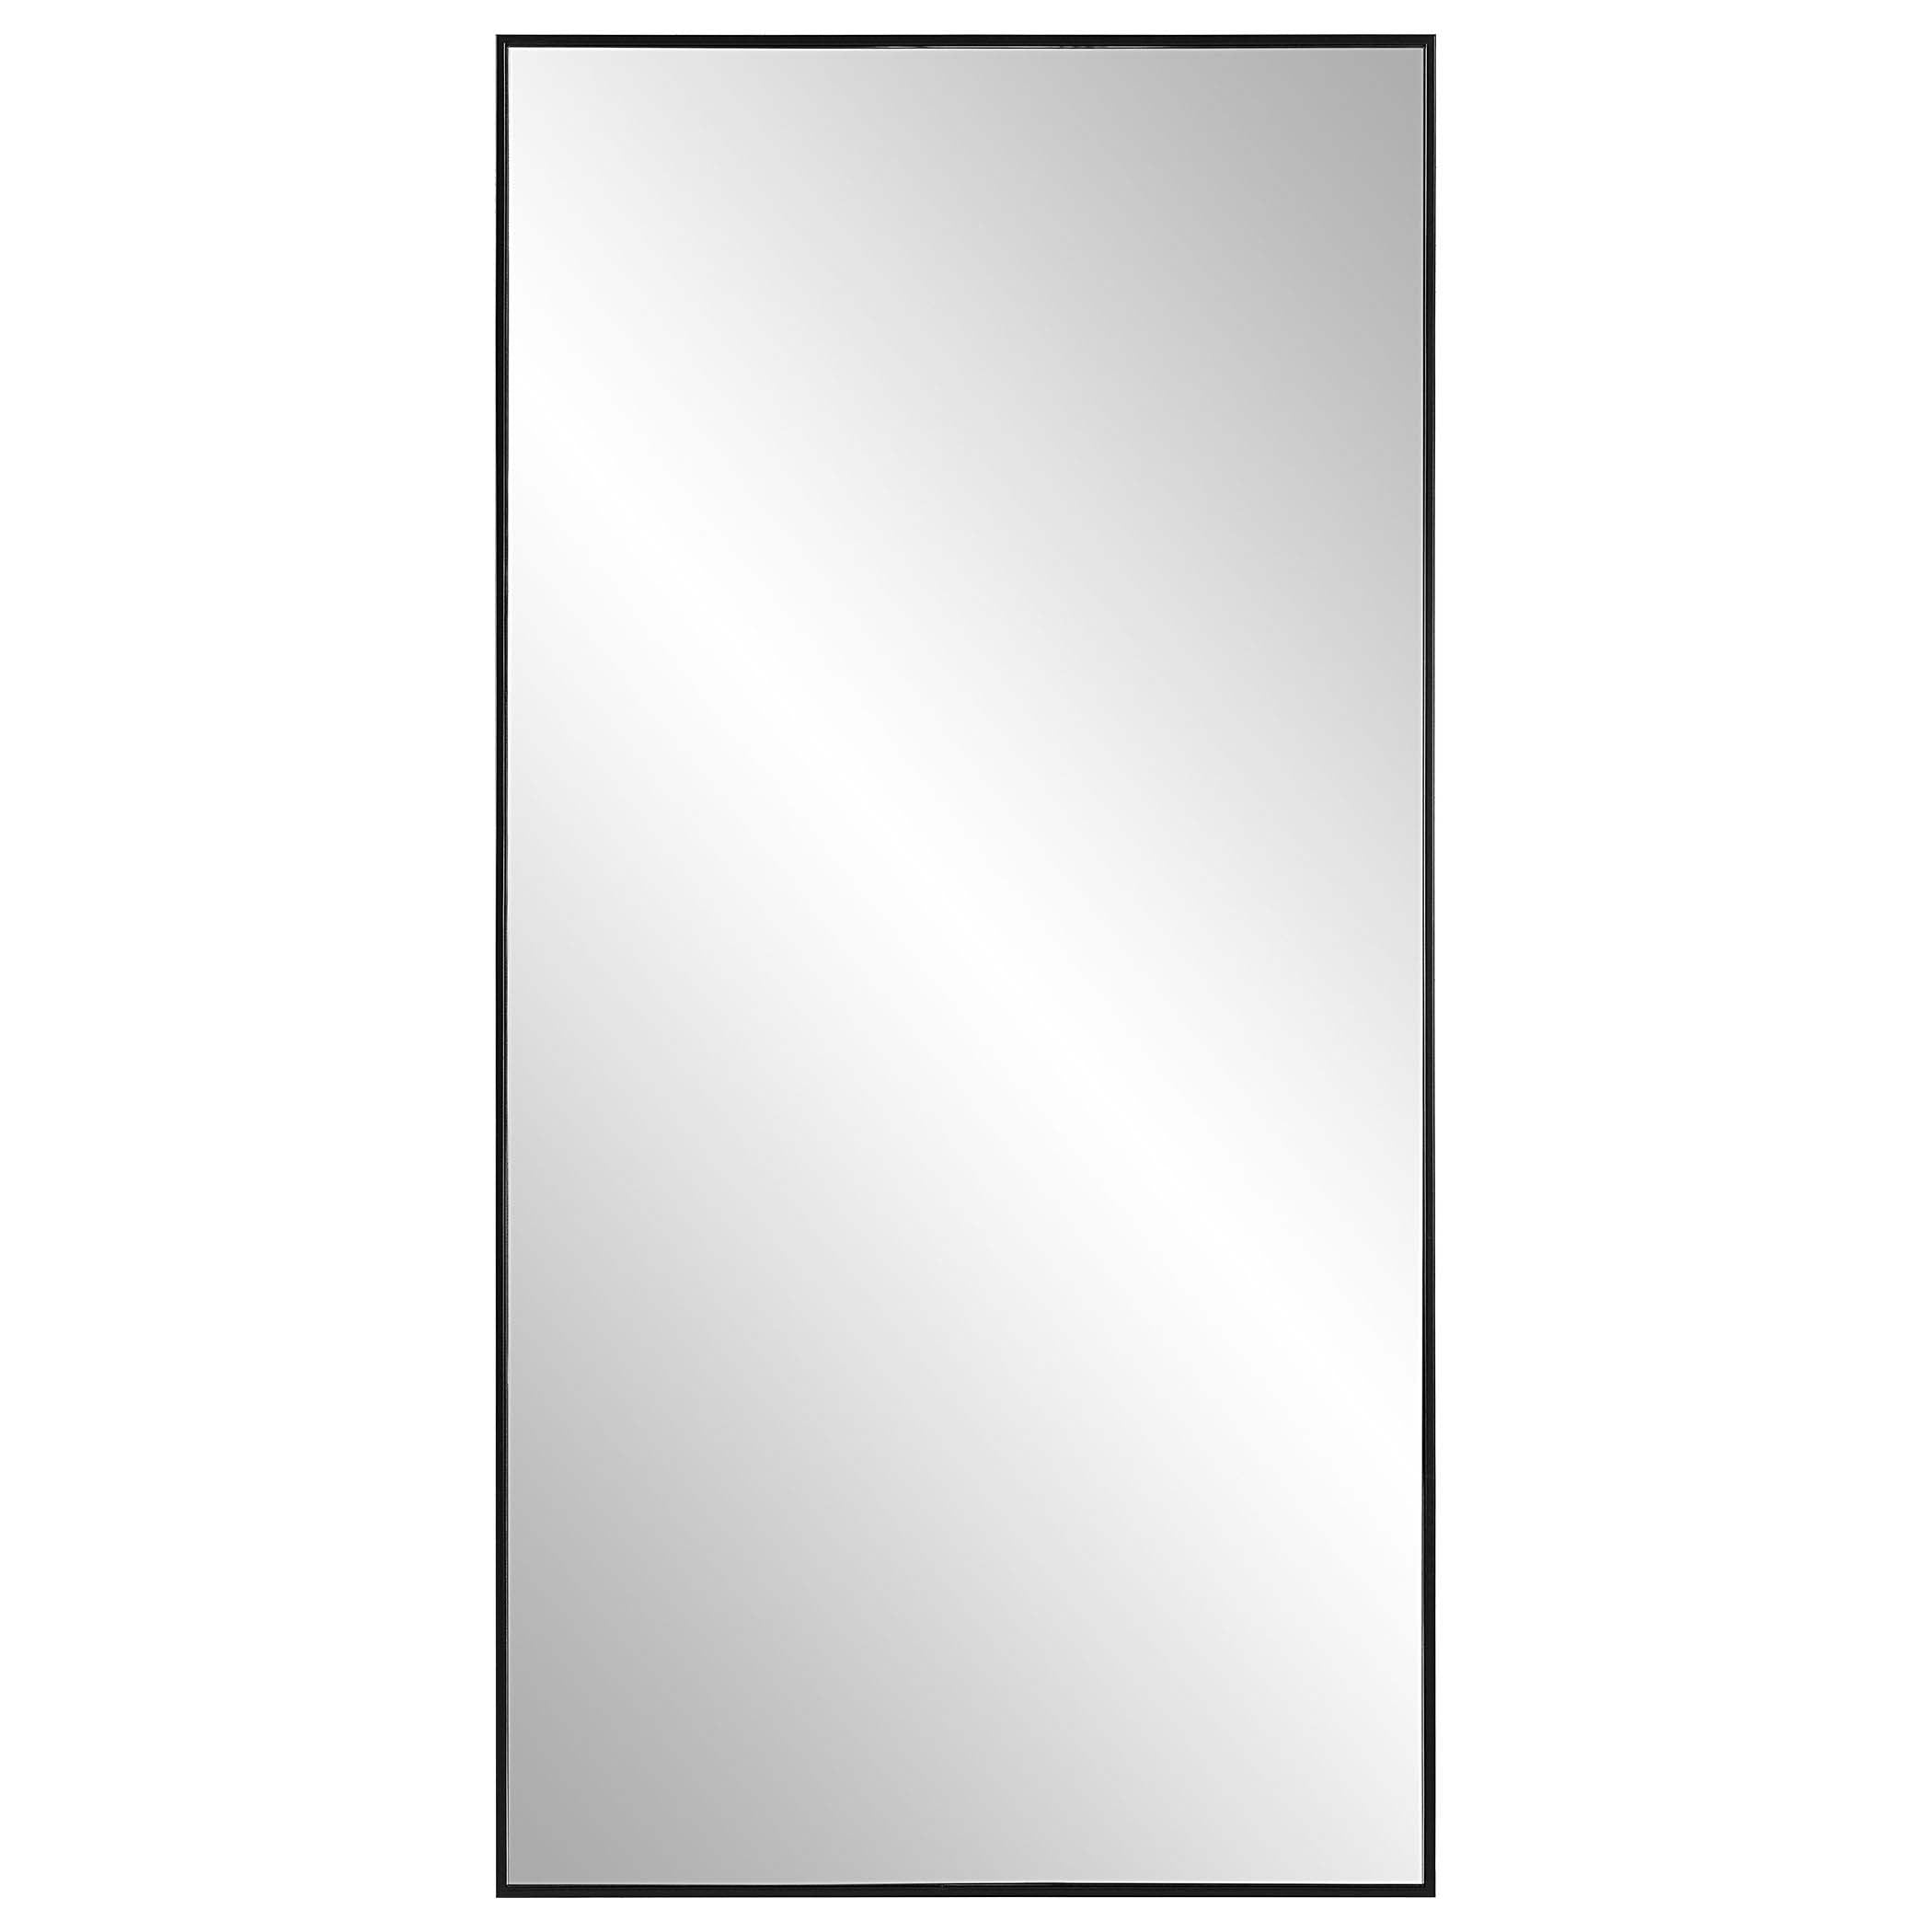 Decor Market Mirror - Black Finish With Plain Mirror